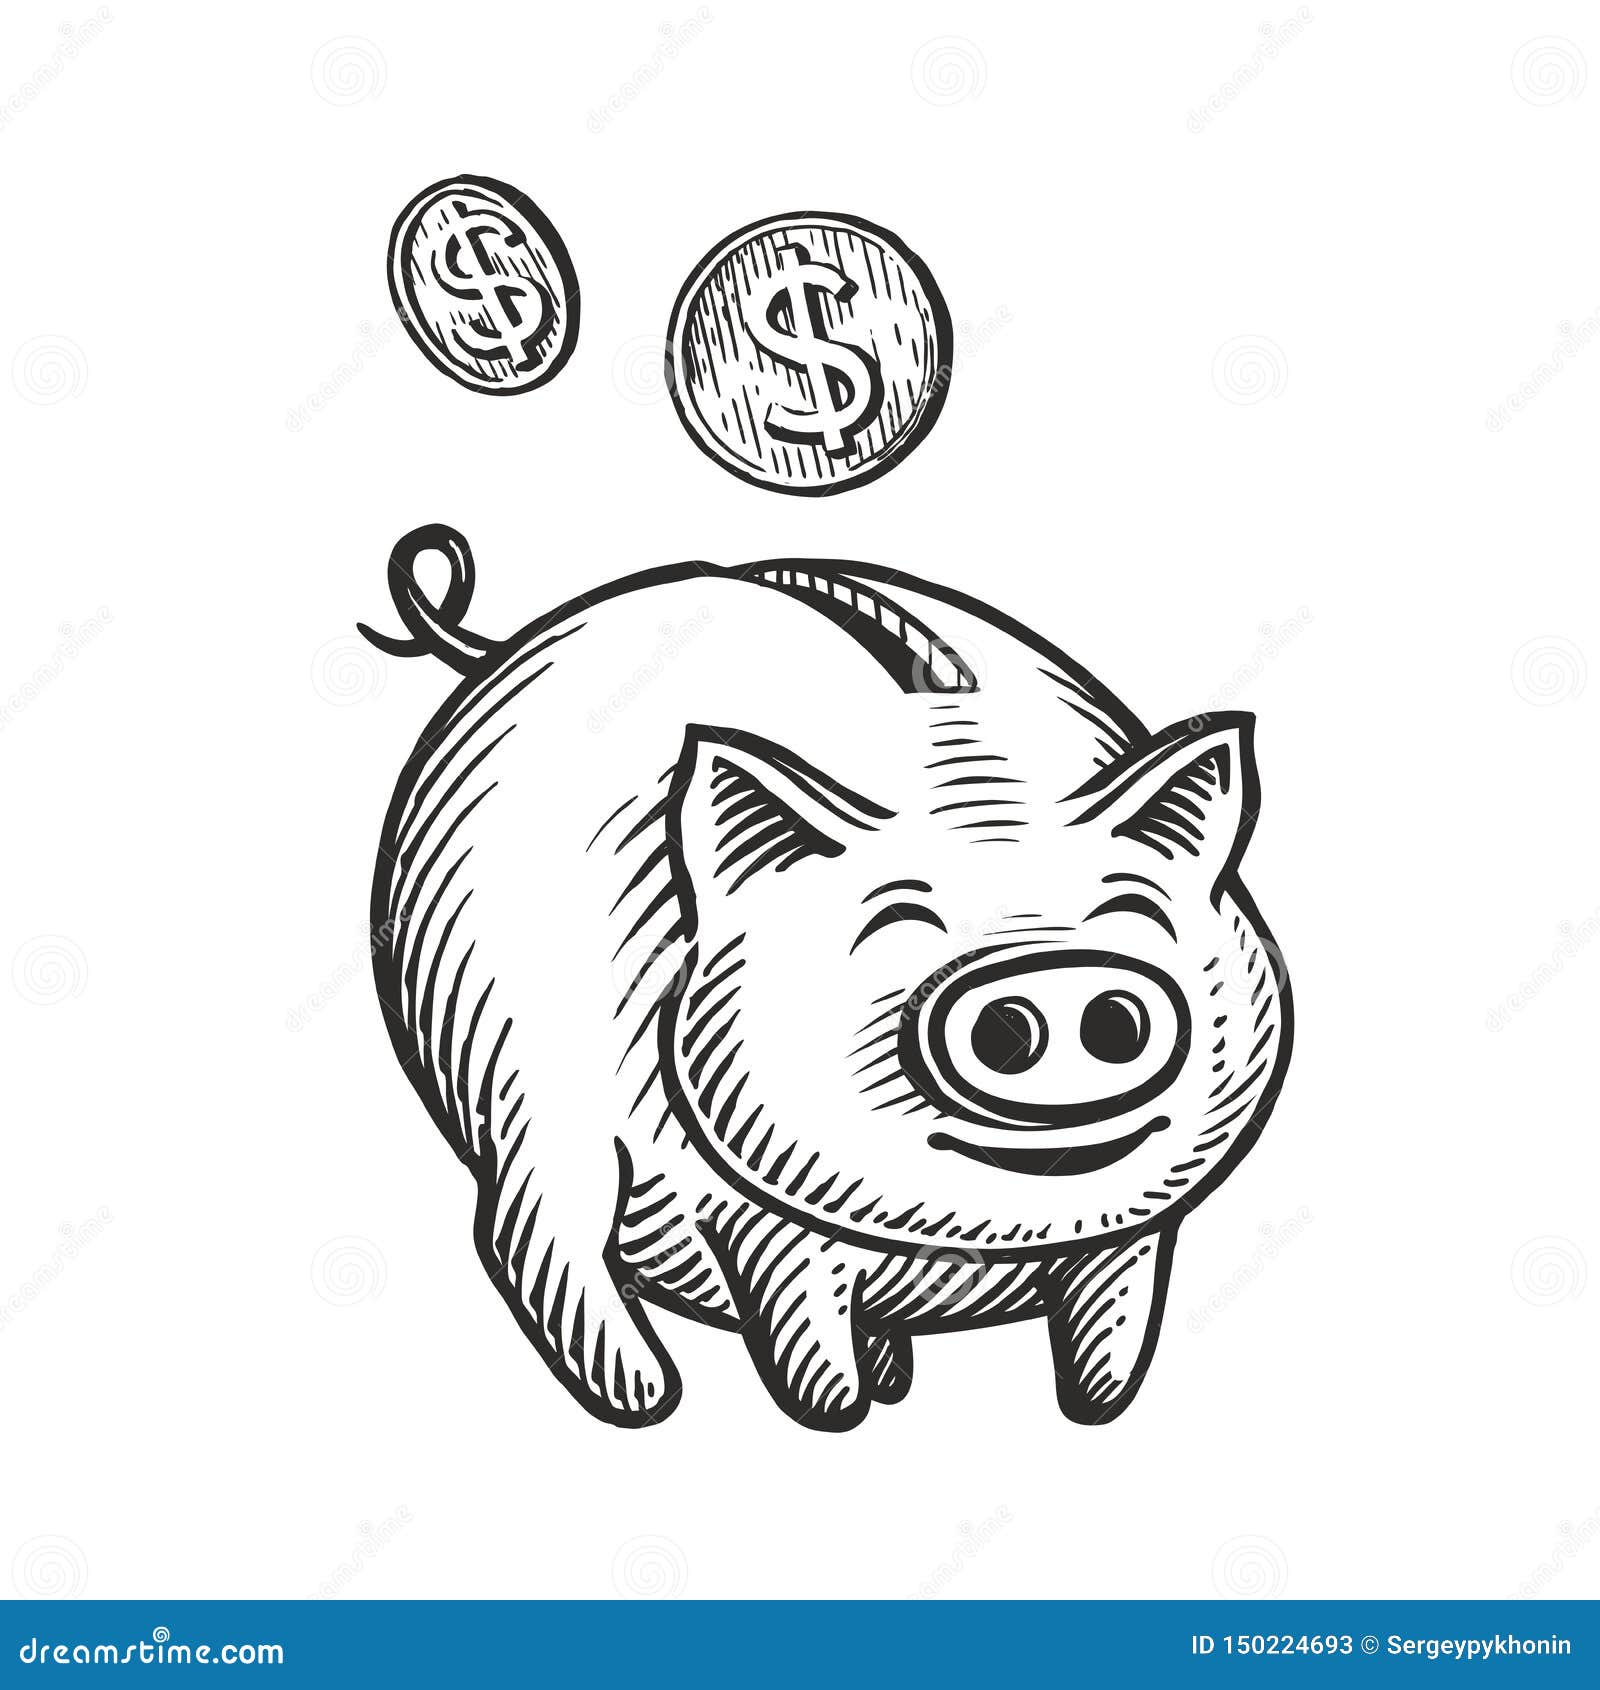 Simple and cute pig piggy bank illustration  Stock Illustration  52961834  PIXTA